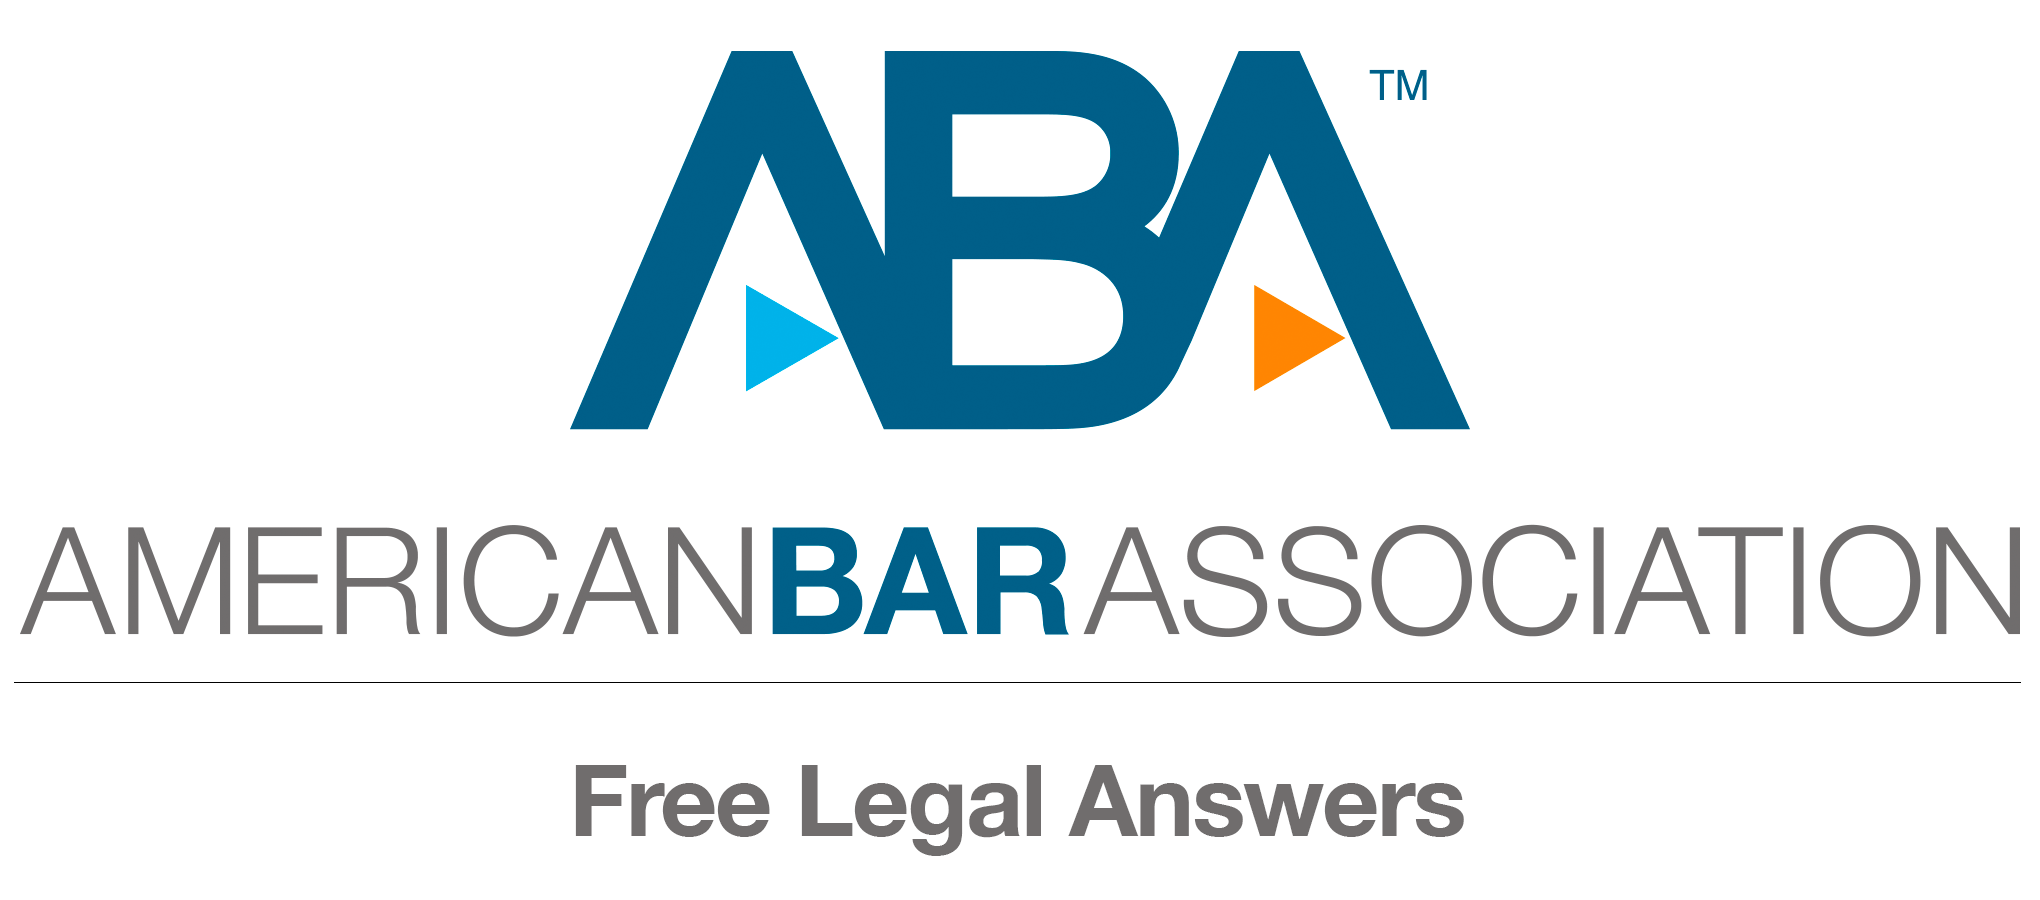 American Bar Association Free Legal Answers logo